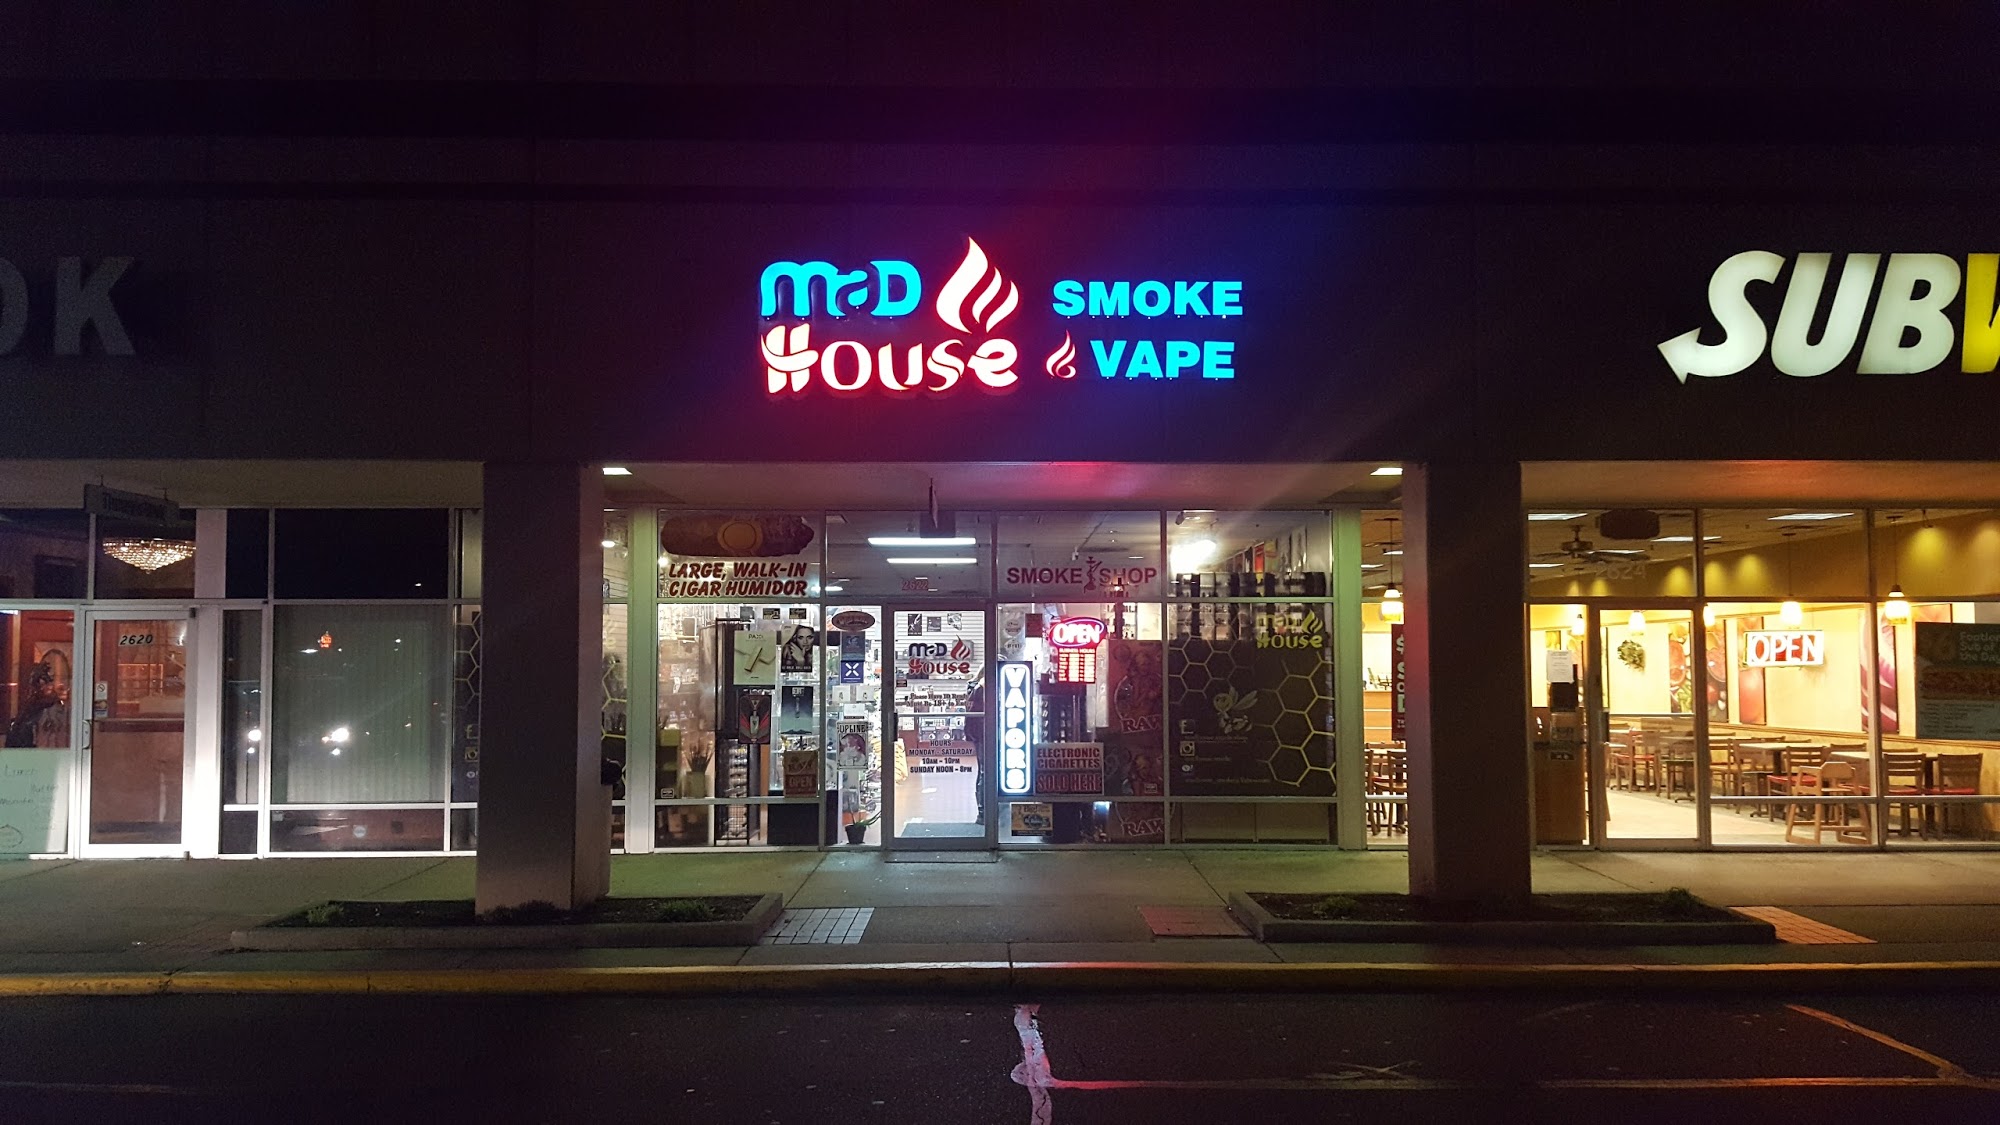 MadHouse Smoke Shop & Vape